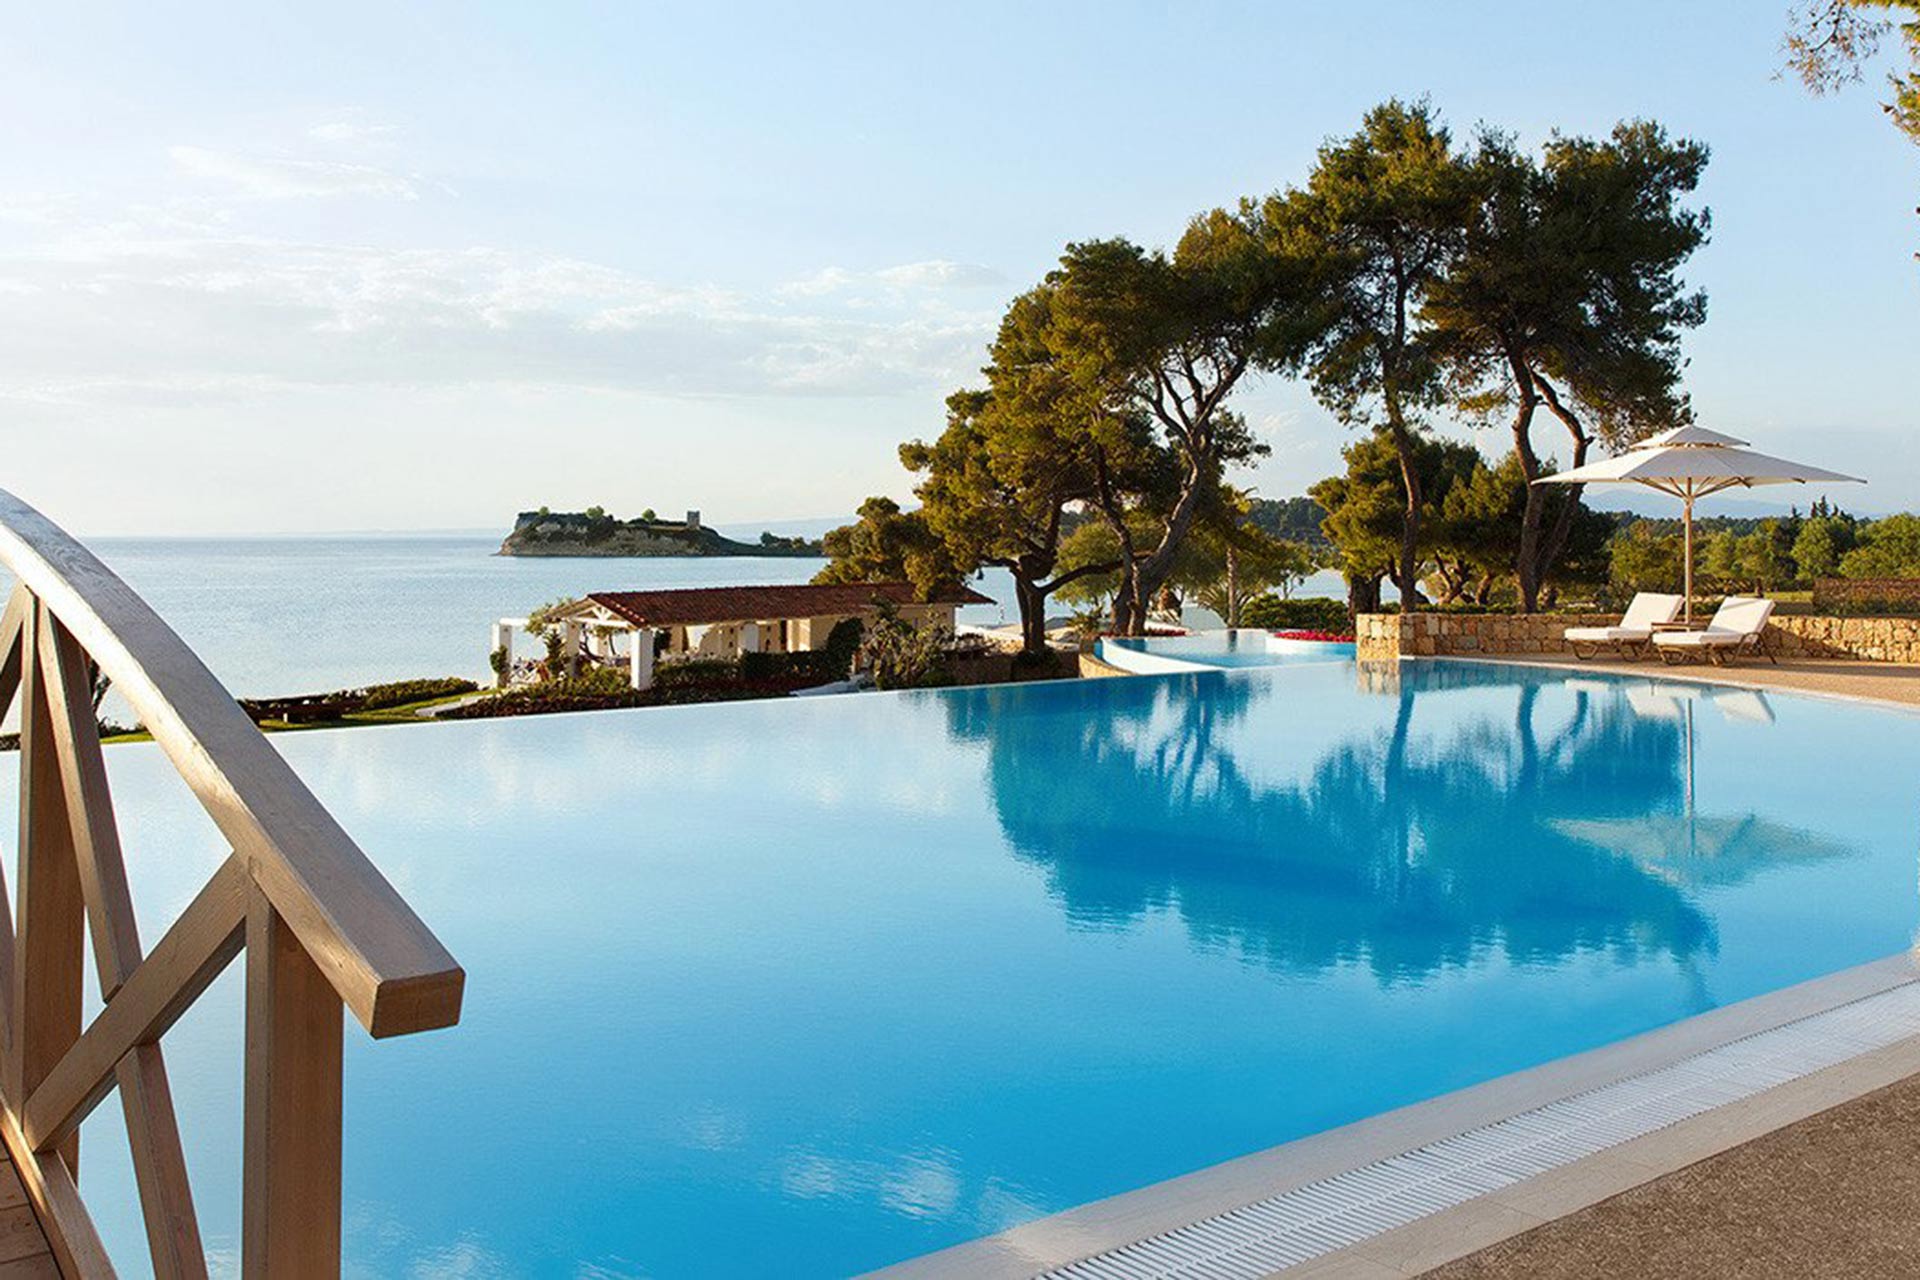 Sani Beach Resort in Kassandra peninsula, Greece